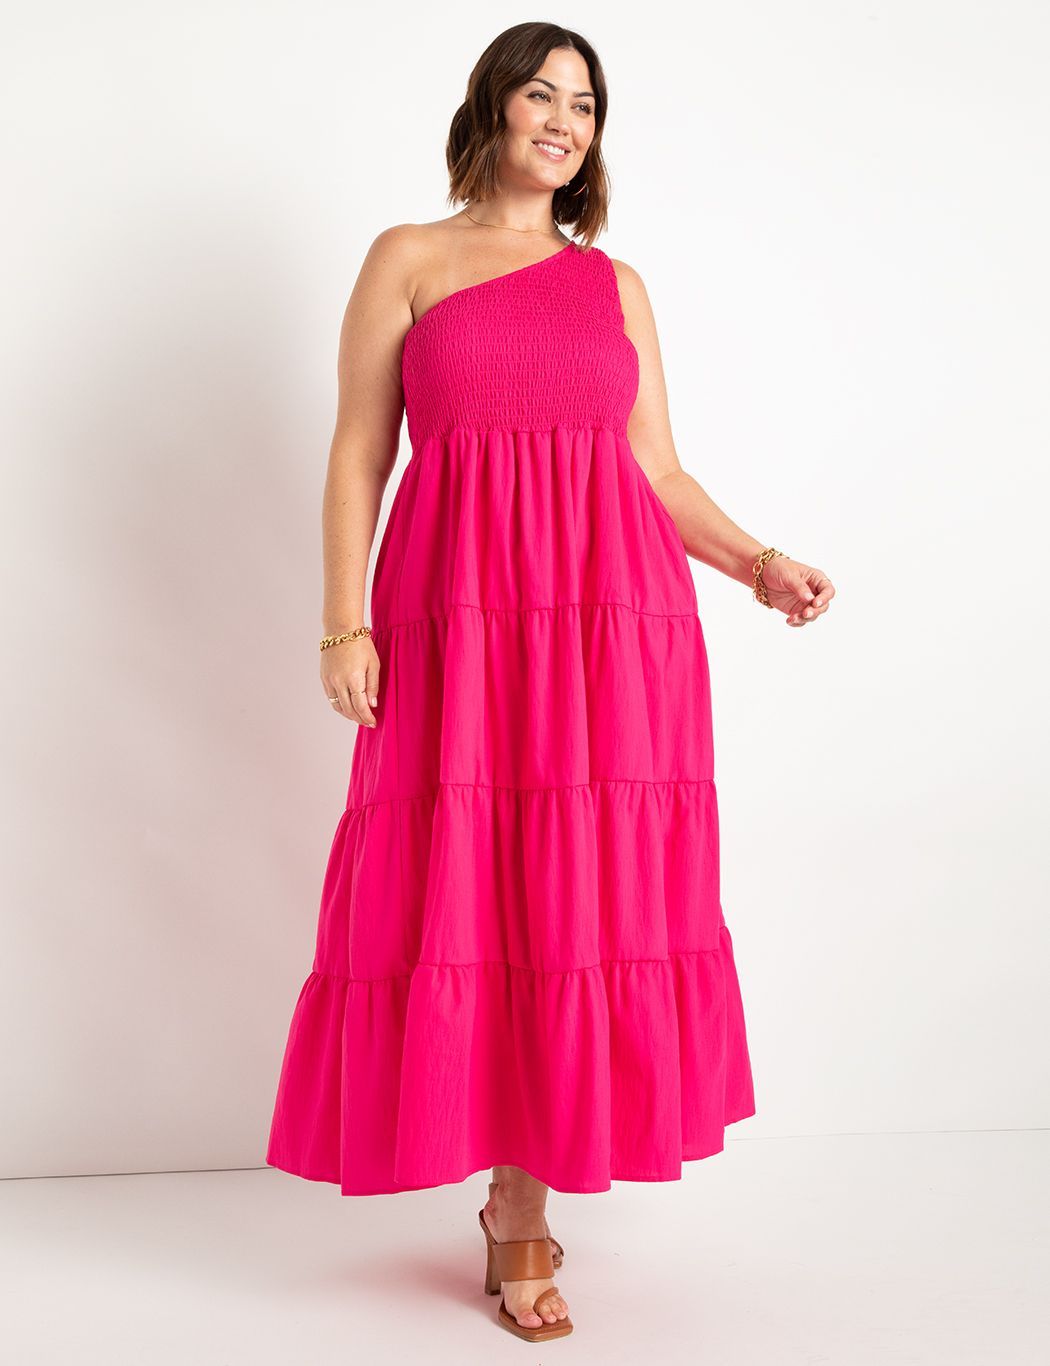 Smocked Bodice One Shoulder Dress | Women's Plus Size Dresses | ELOQUII | Eloquii